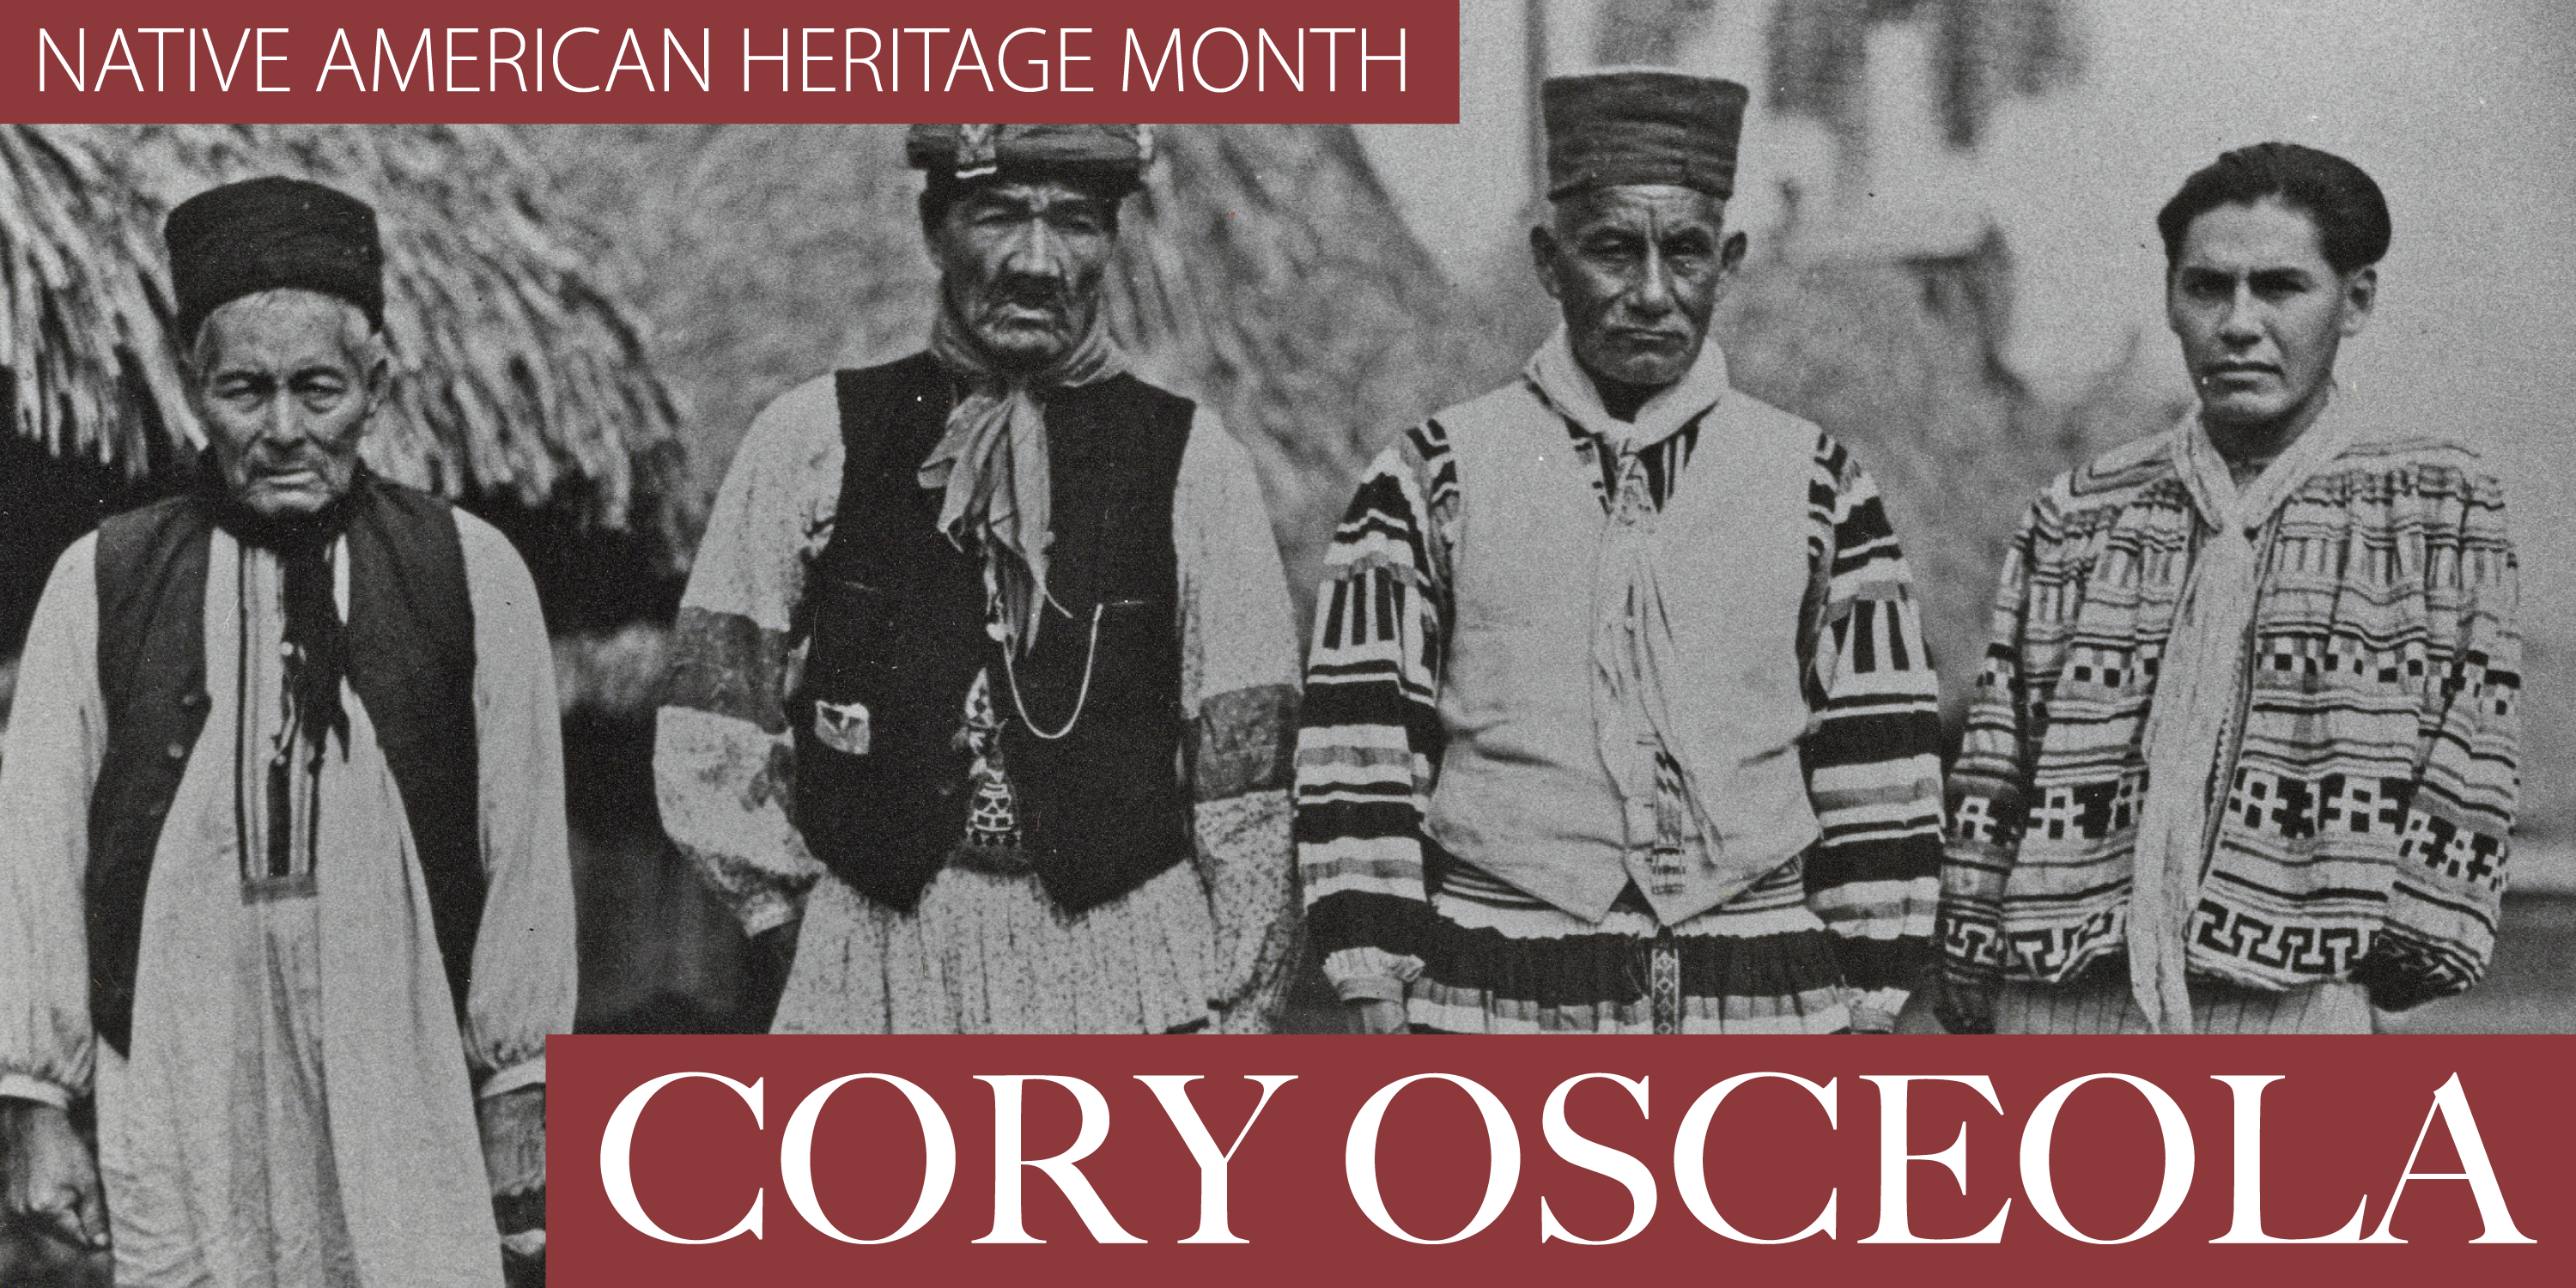 Native American Heritage Month: Cory Osceola